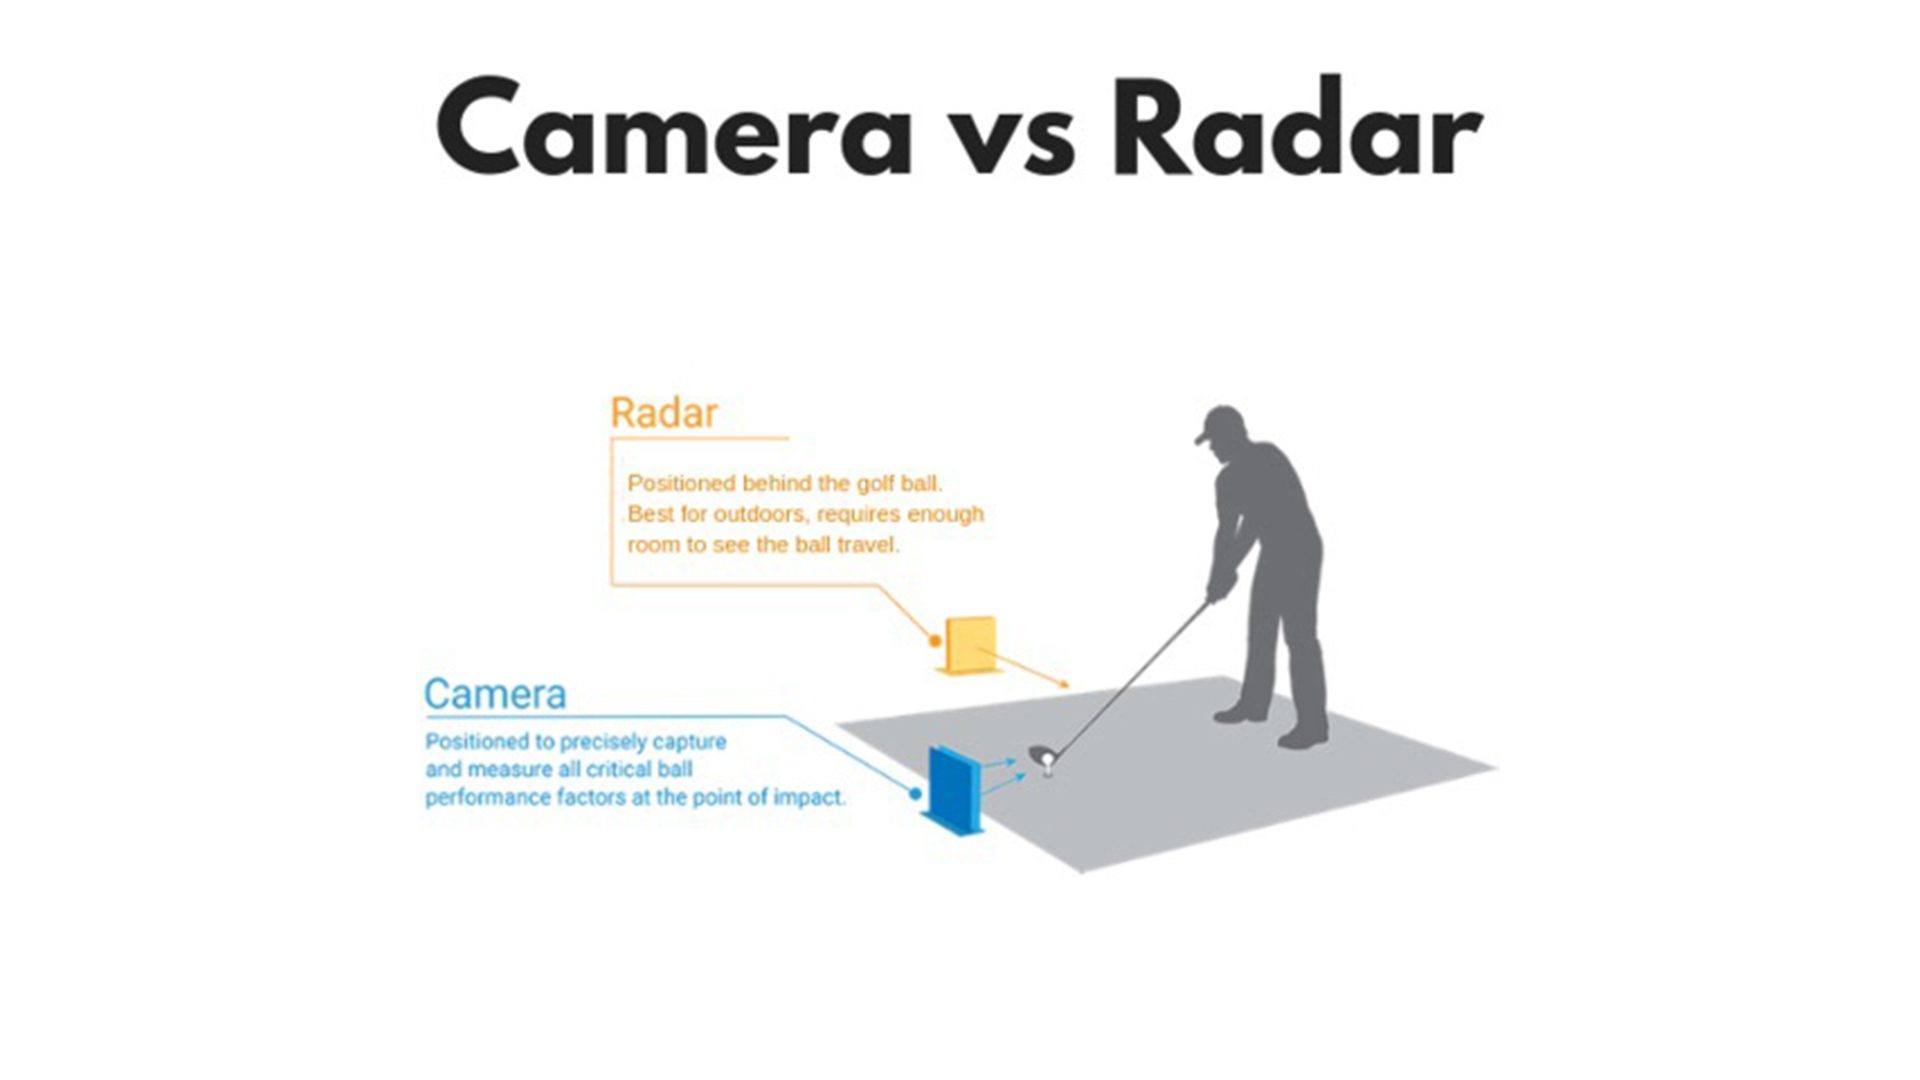 Camera vs. Radar Technology for golf simulators